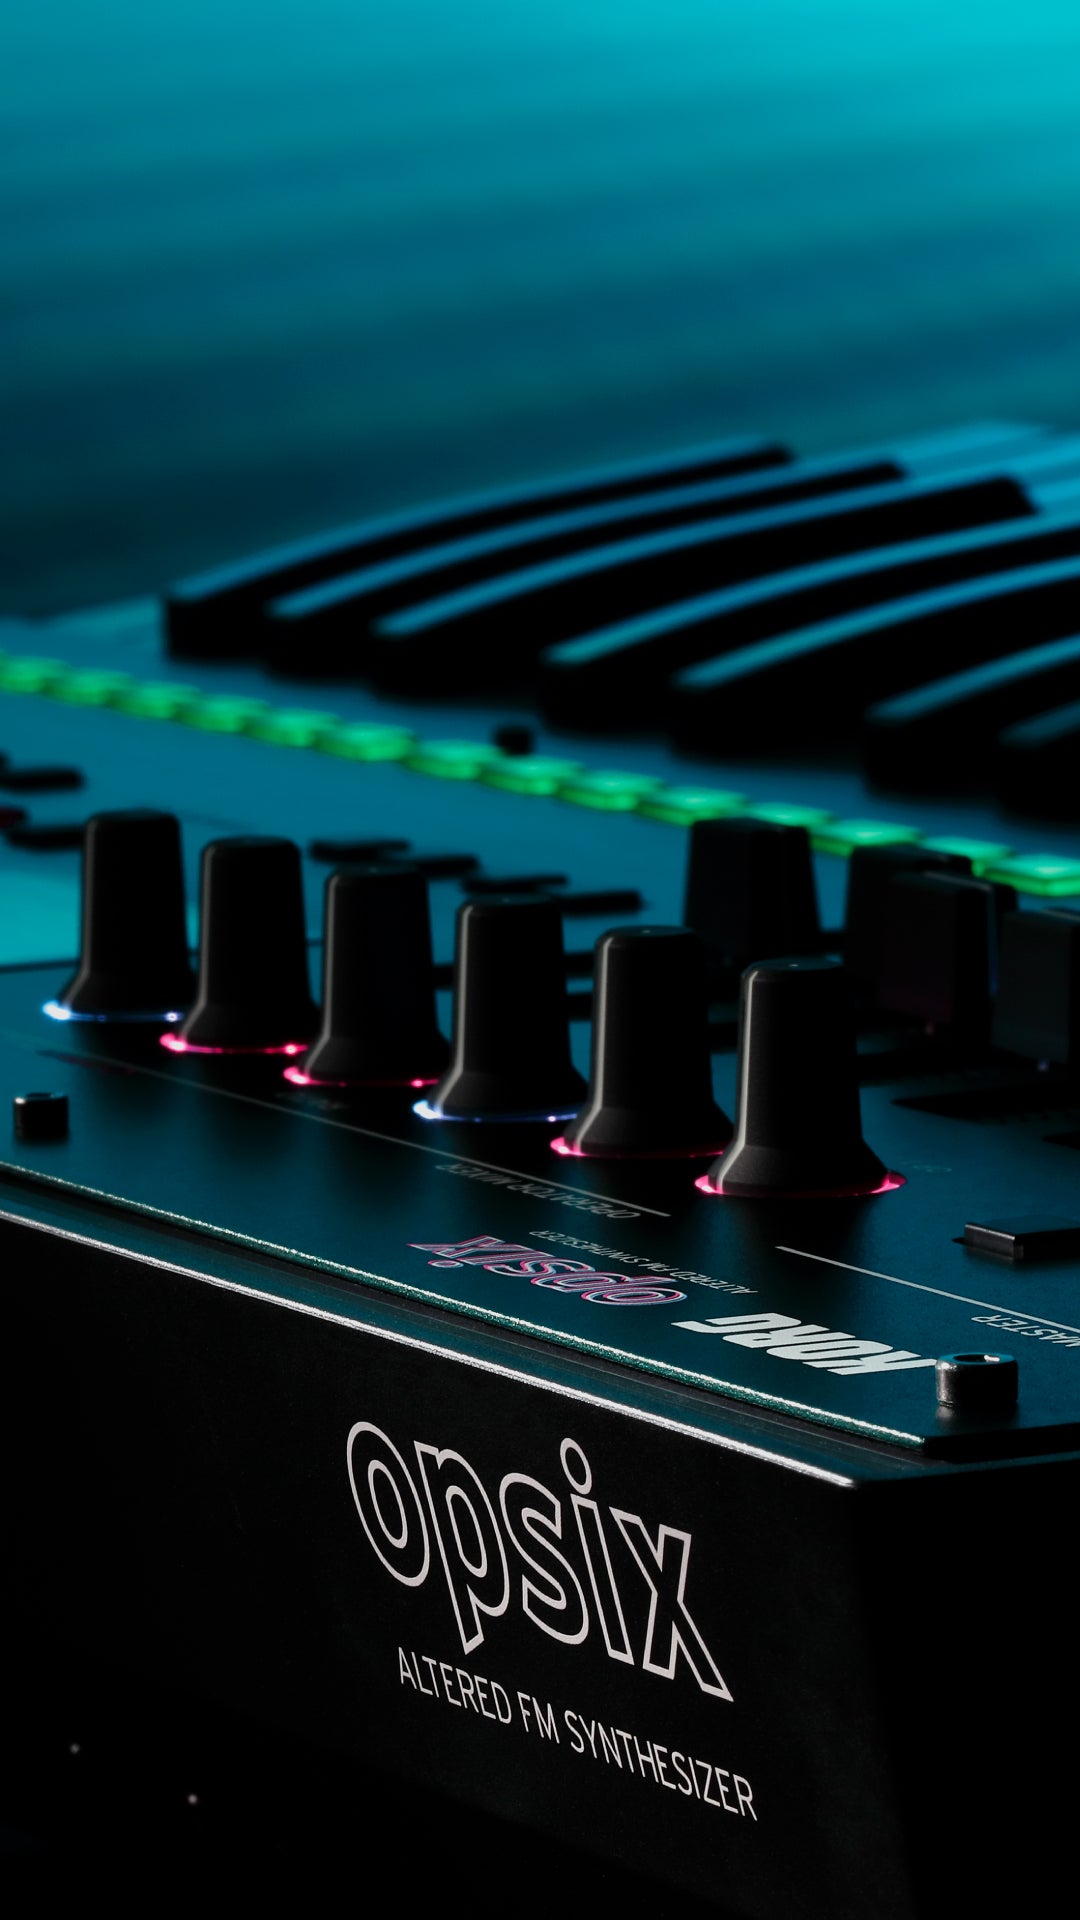 KORG opsix altered FM synthesizer 